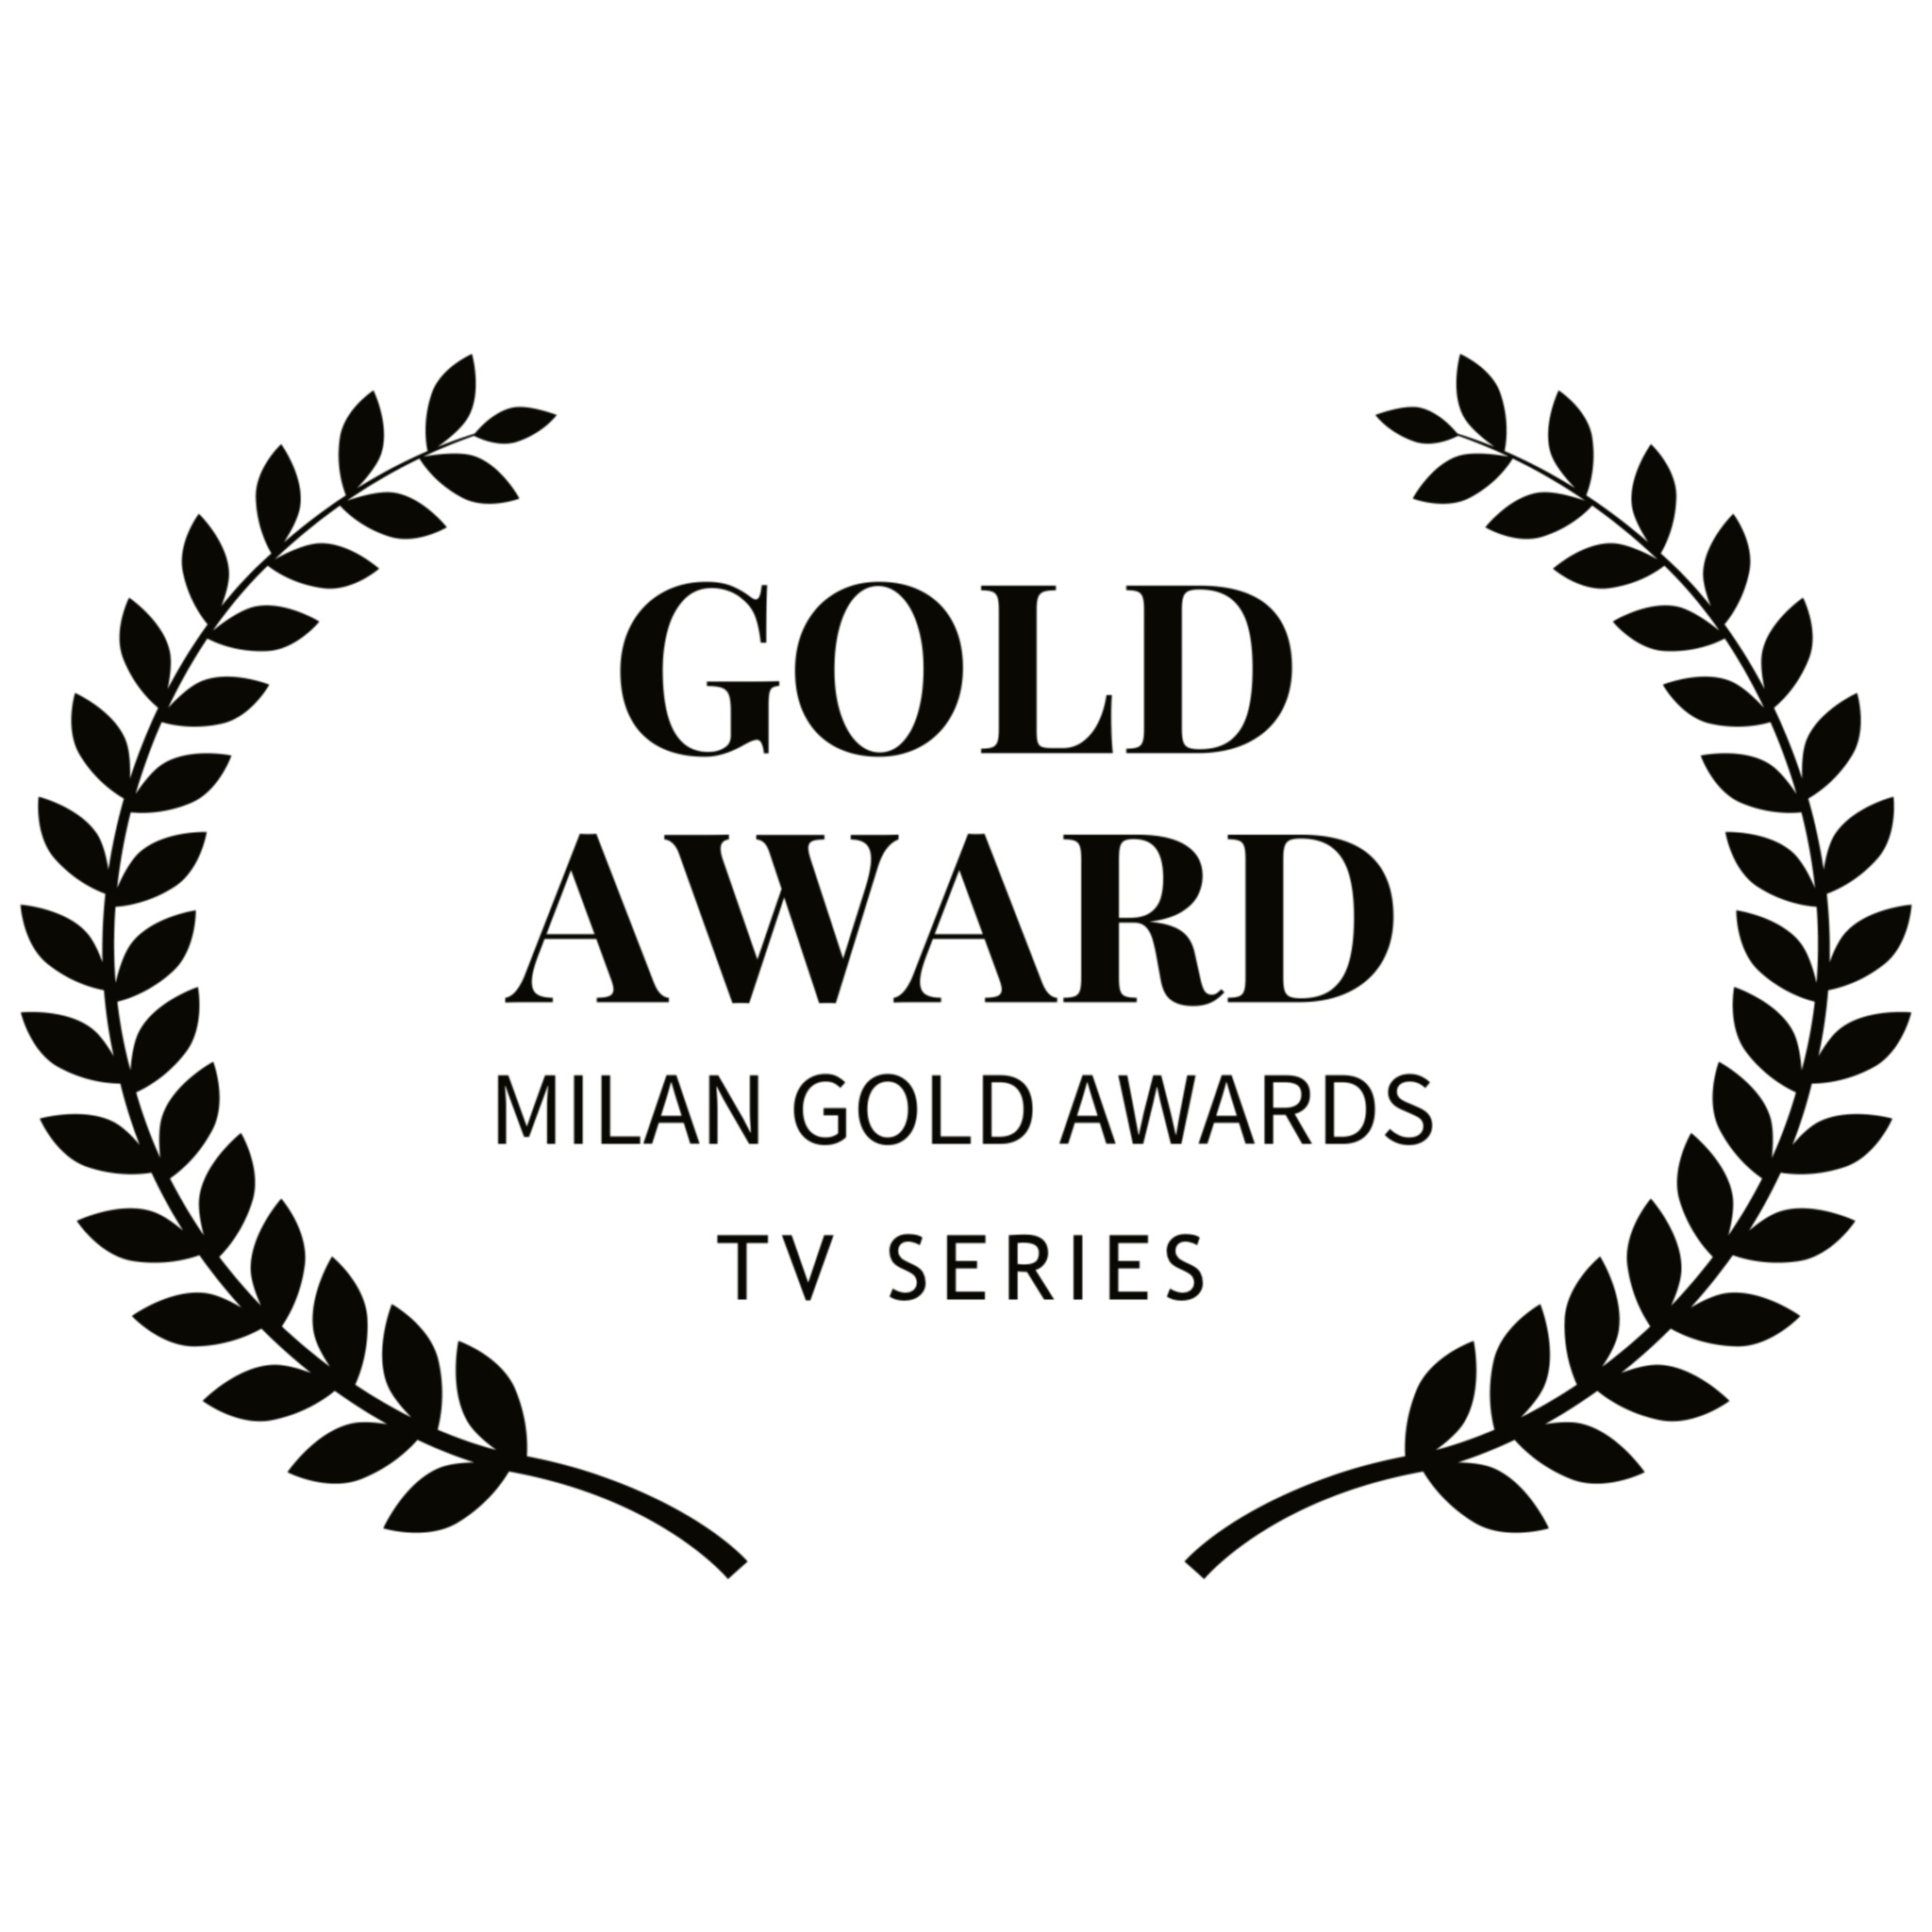 GOLD AWARD - MILAN GOLD AWARDS - TV SERIES